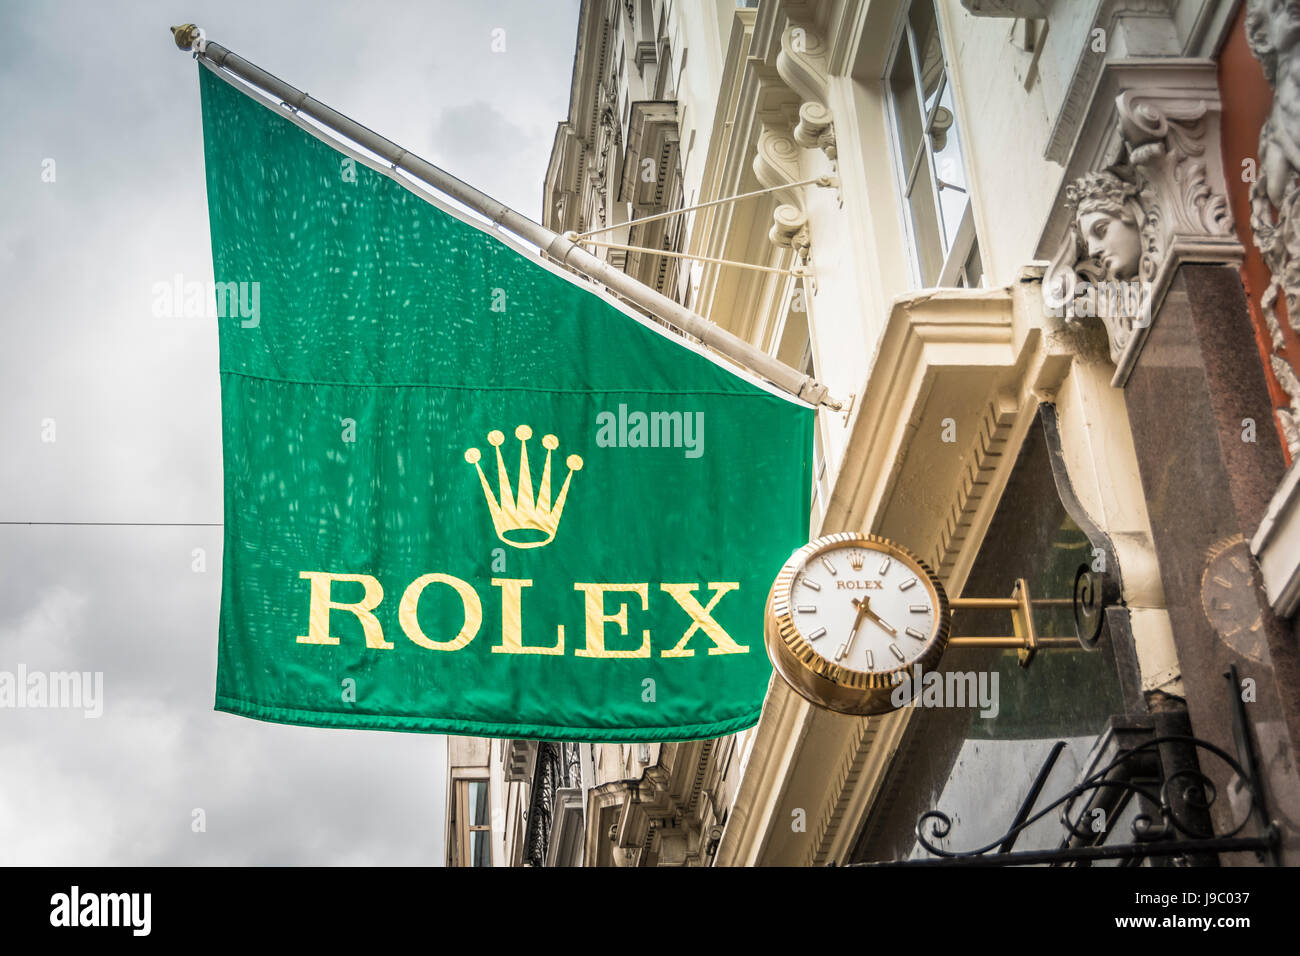 Forudsætning Absay Gentagen Rolex Boutique, next door to the Royal Arcade on Old Bond Street, London,  UK Stock Photo - Alamy